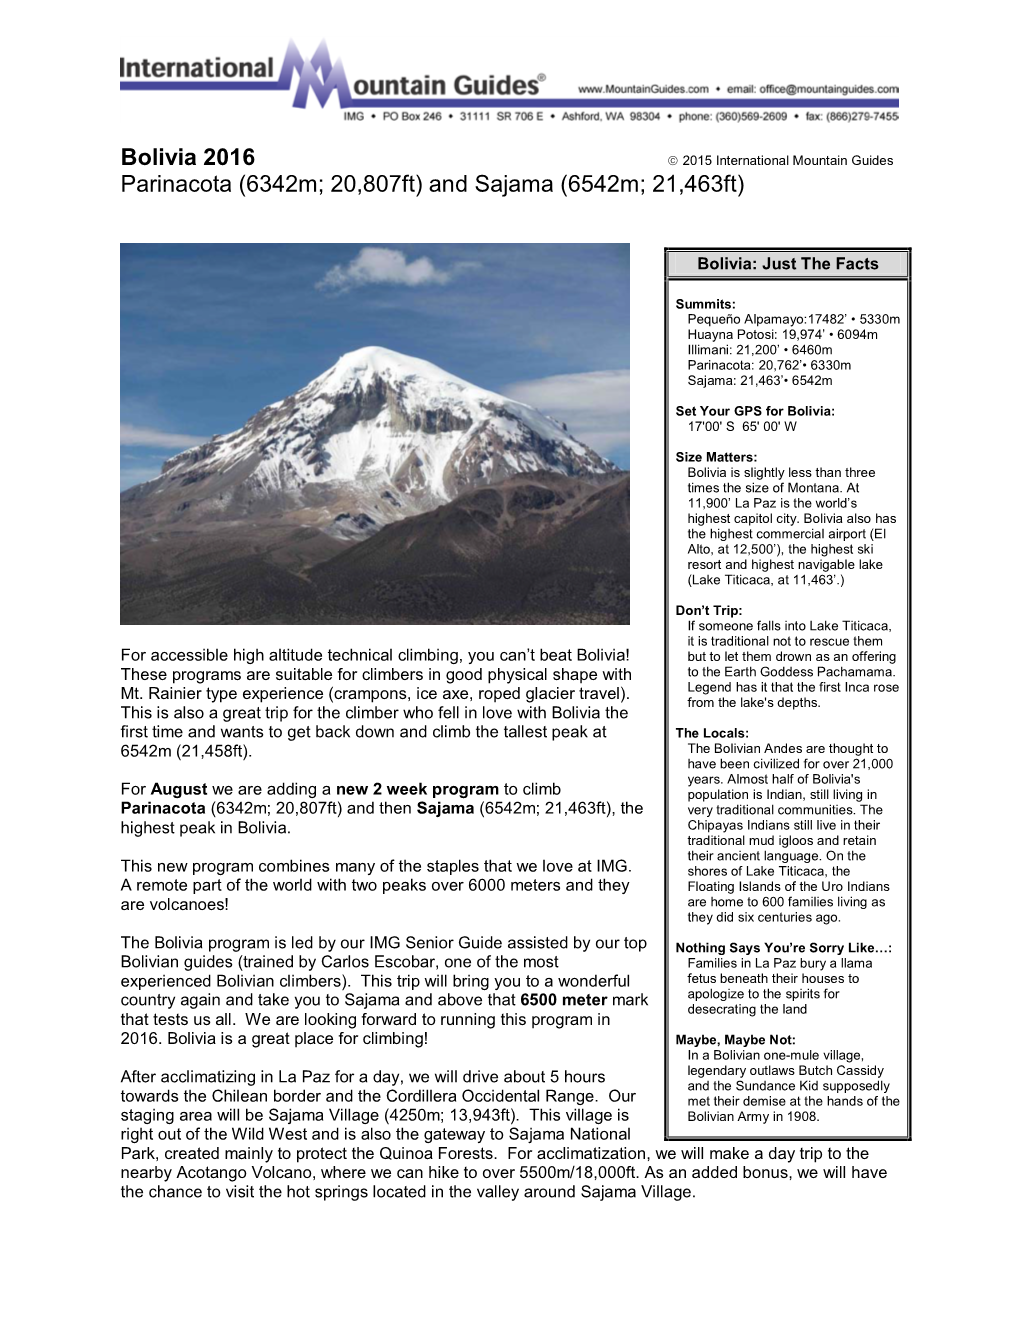 International Mountain Guides Parinacota (6342M; 20,807Ft) and Sajama (6542M; 21,463Ft)